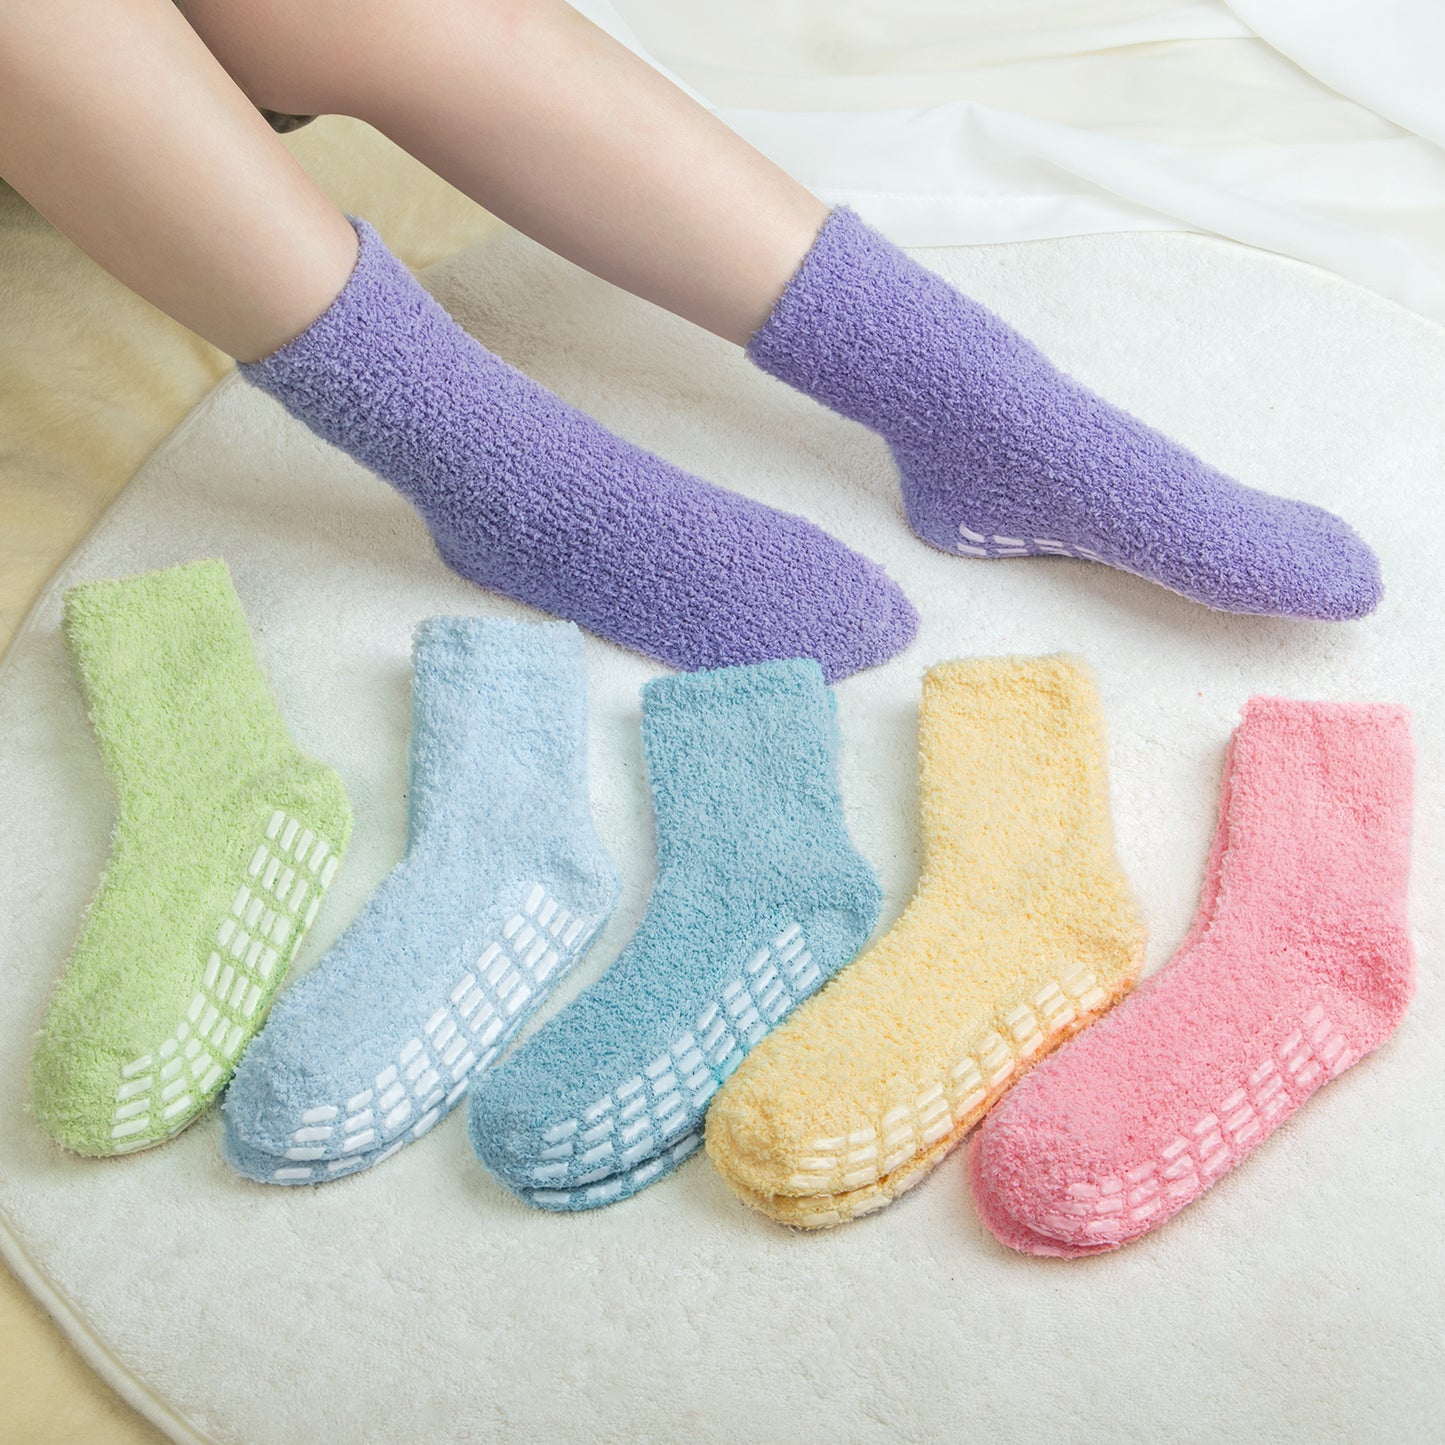 Loritta Winter Womens Fuzzy Socks Soft Warm Cozy Fluffy Soft Slipper Socks Gifts 6 Pairs